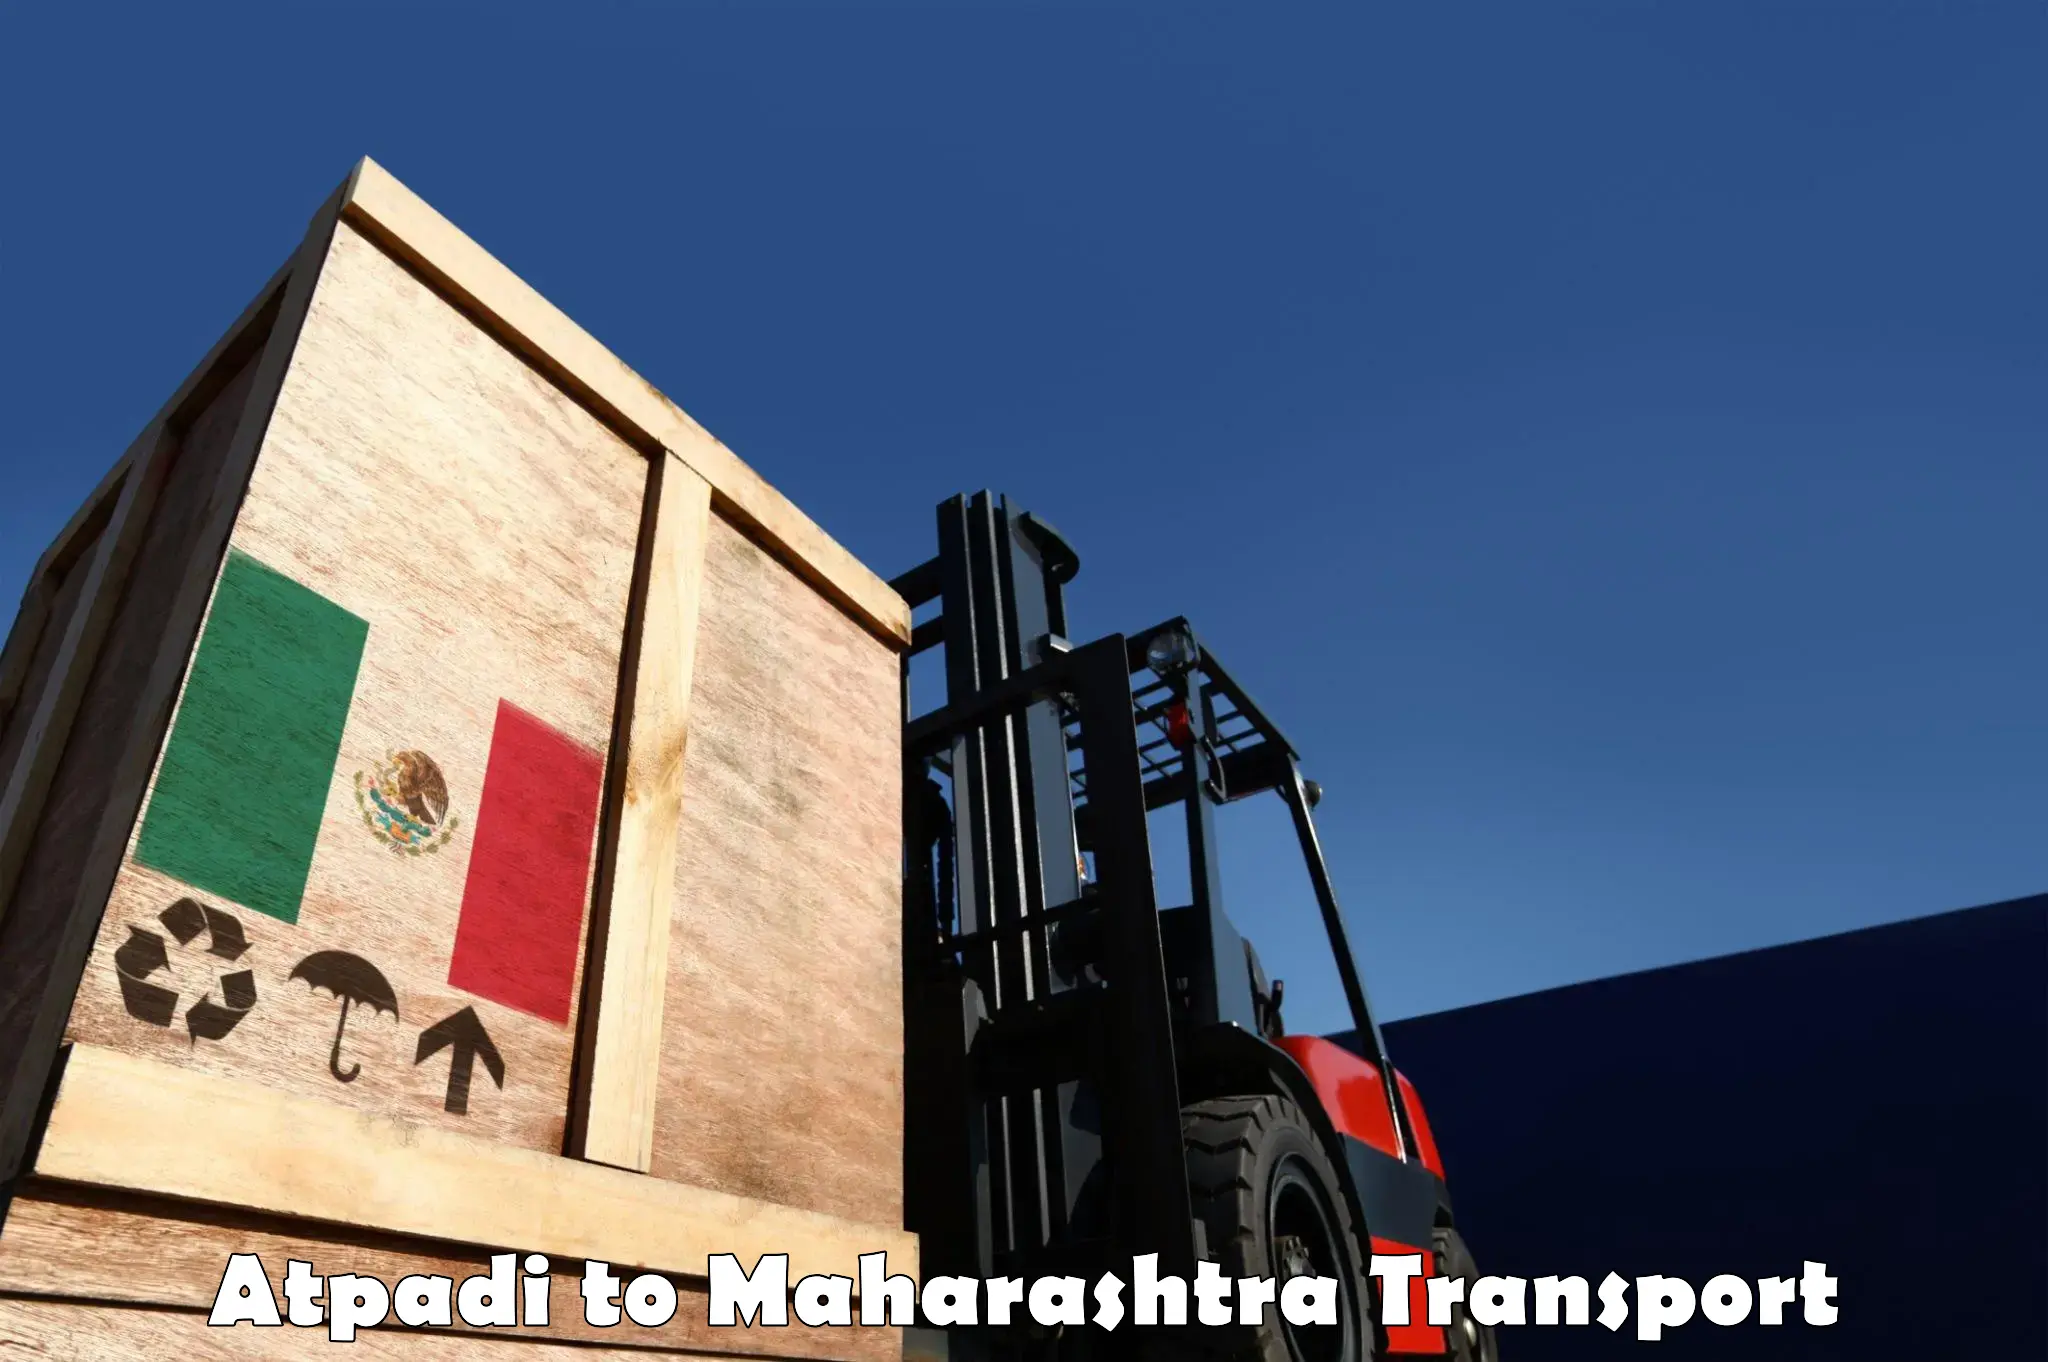 Truck transport companies in India Atpadi to Madgyal